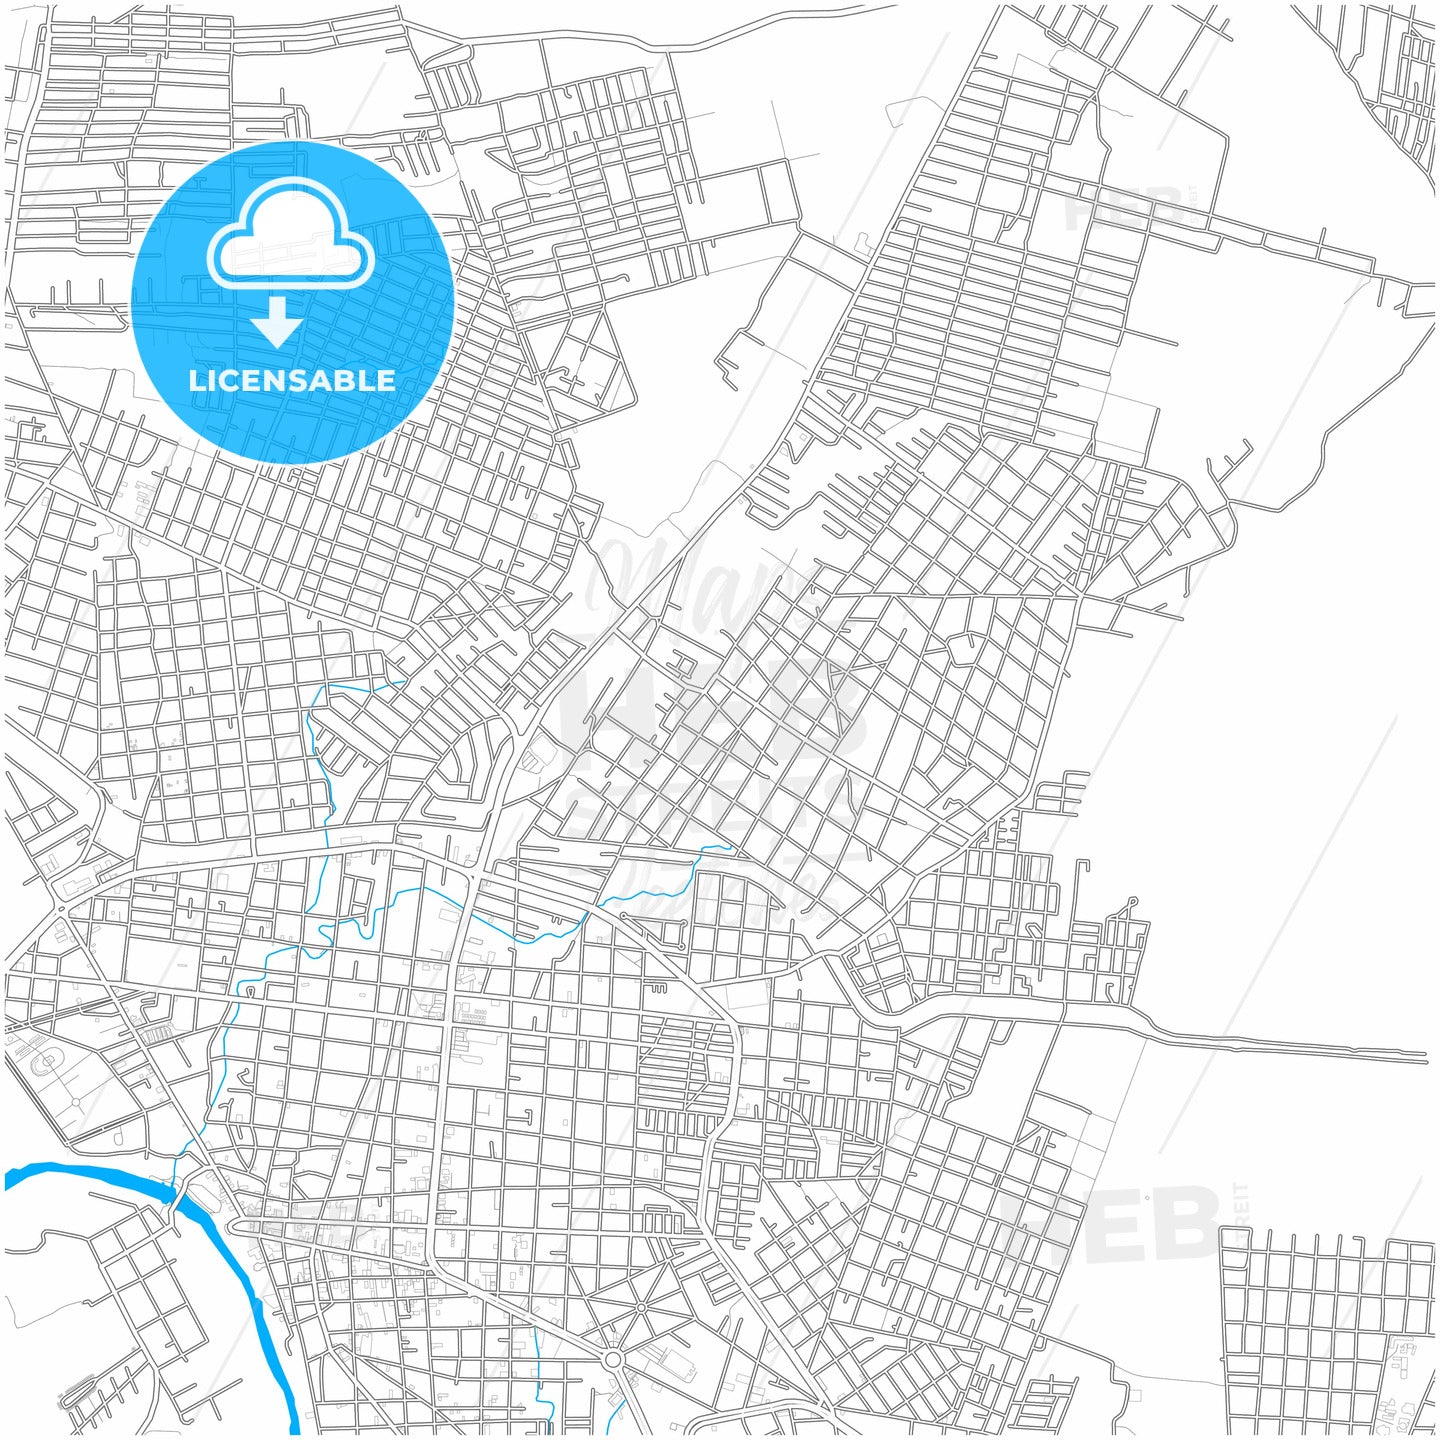 Ciudad Valles, San Luis Potosí, Mexico, city map with high quality roads.